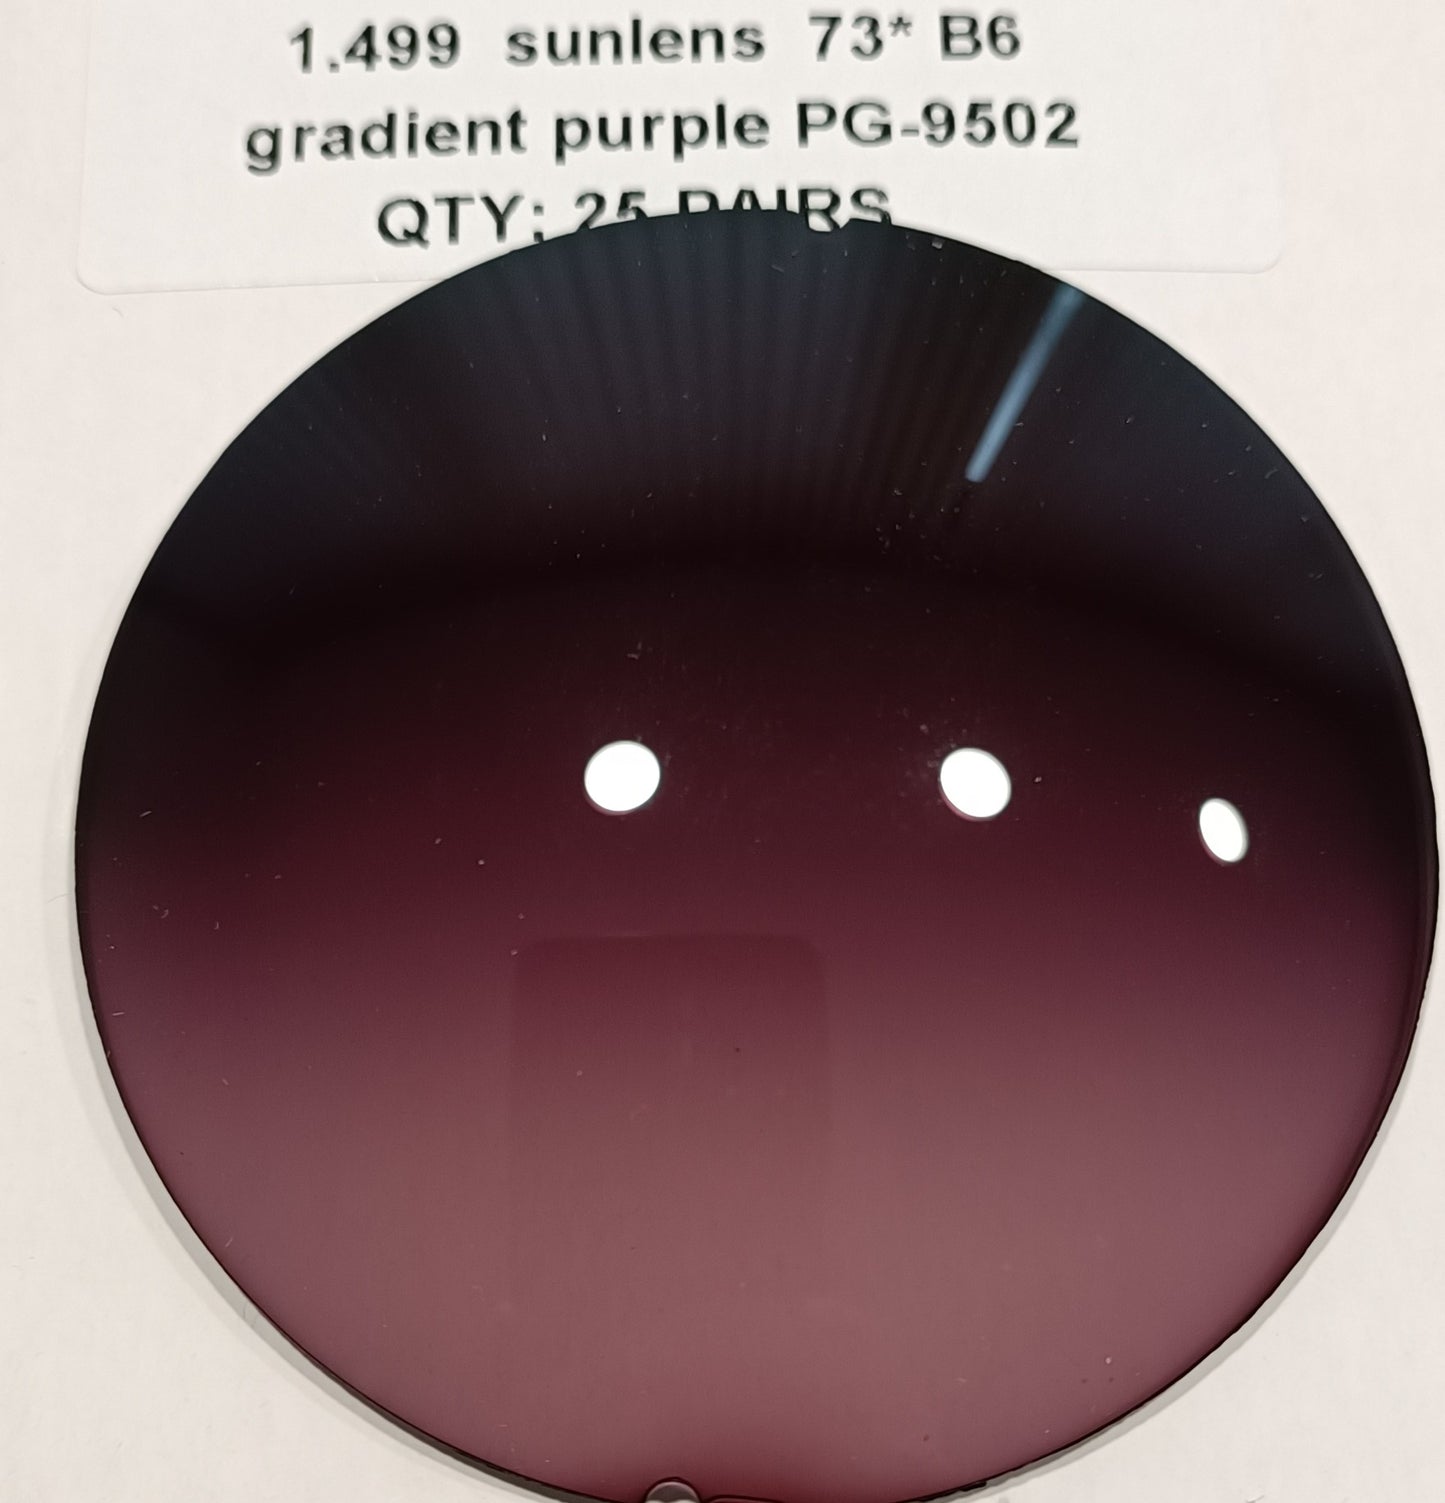 Grinding into full-rim glasses: Purple in the gradient 